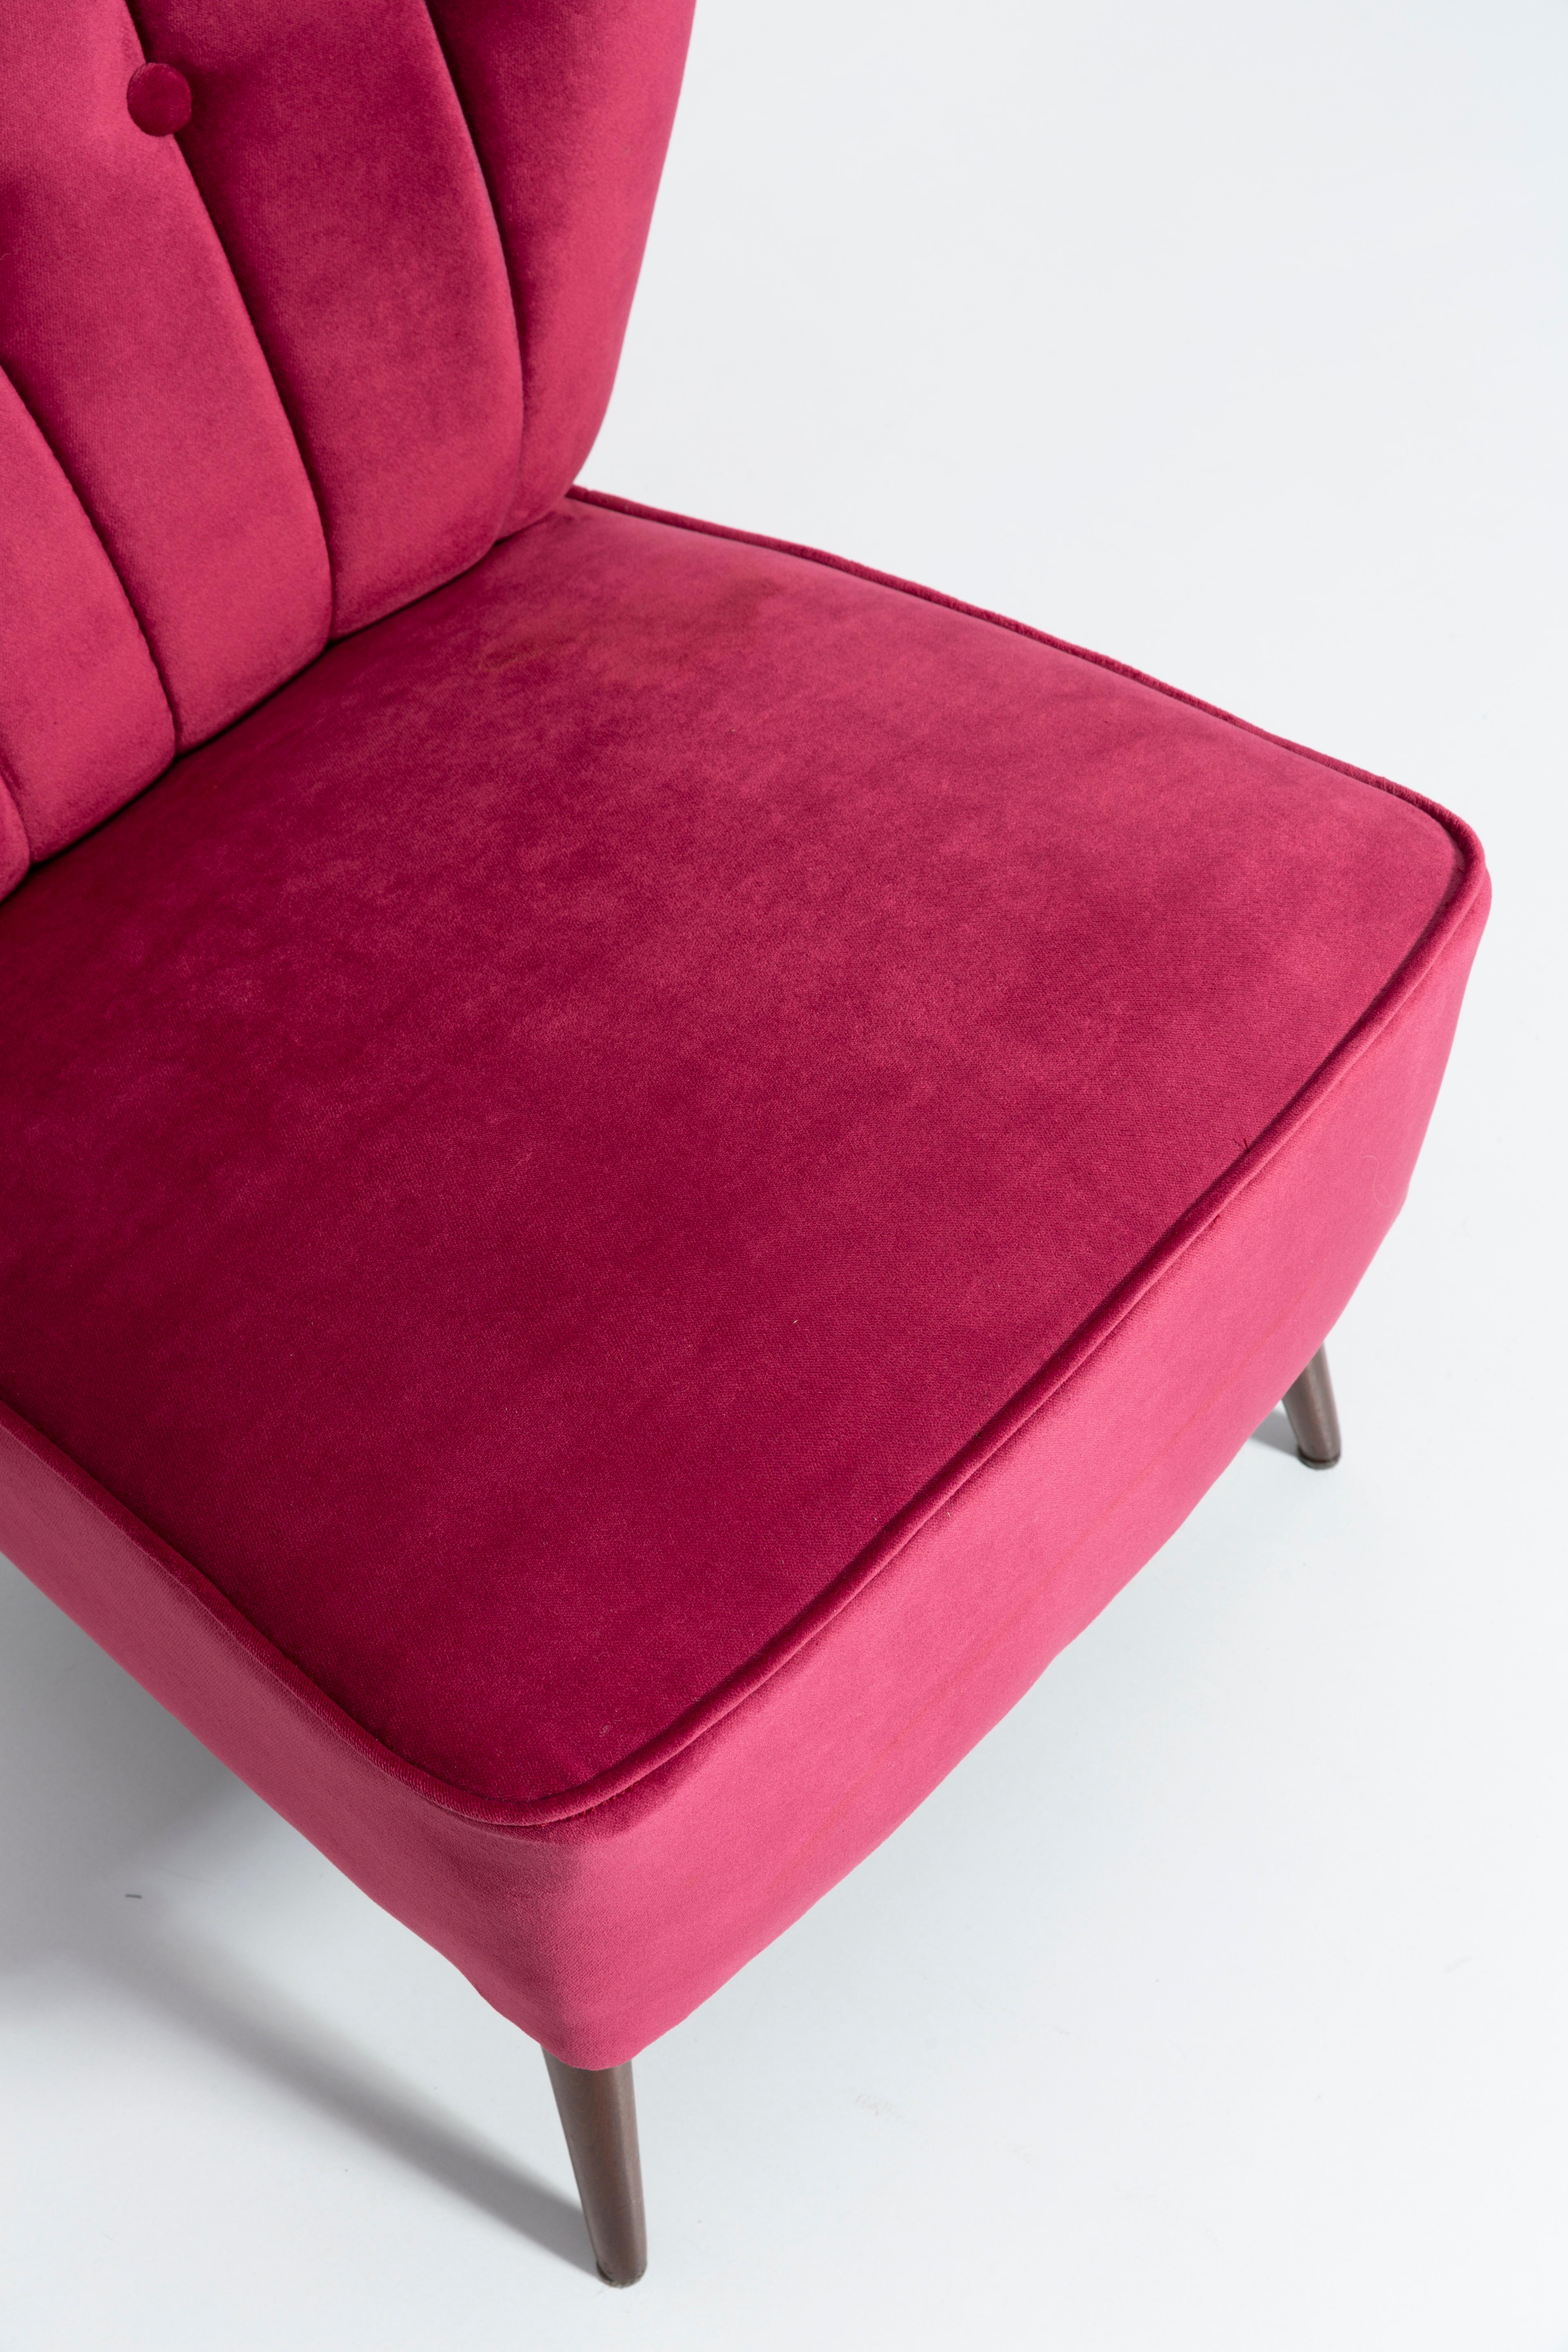 Set of Six Midcentury Pink Magenta Velvet Club Armchairs, Europe, 1960s For Sale 3